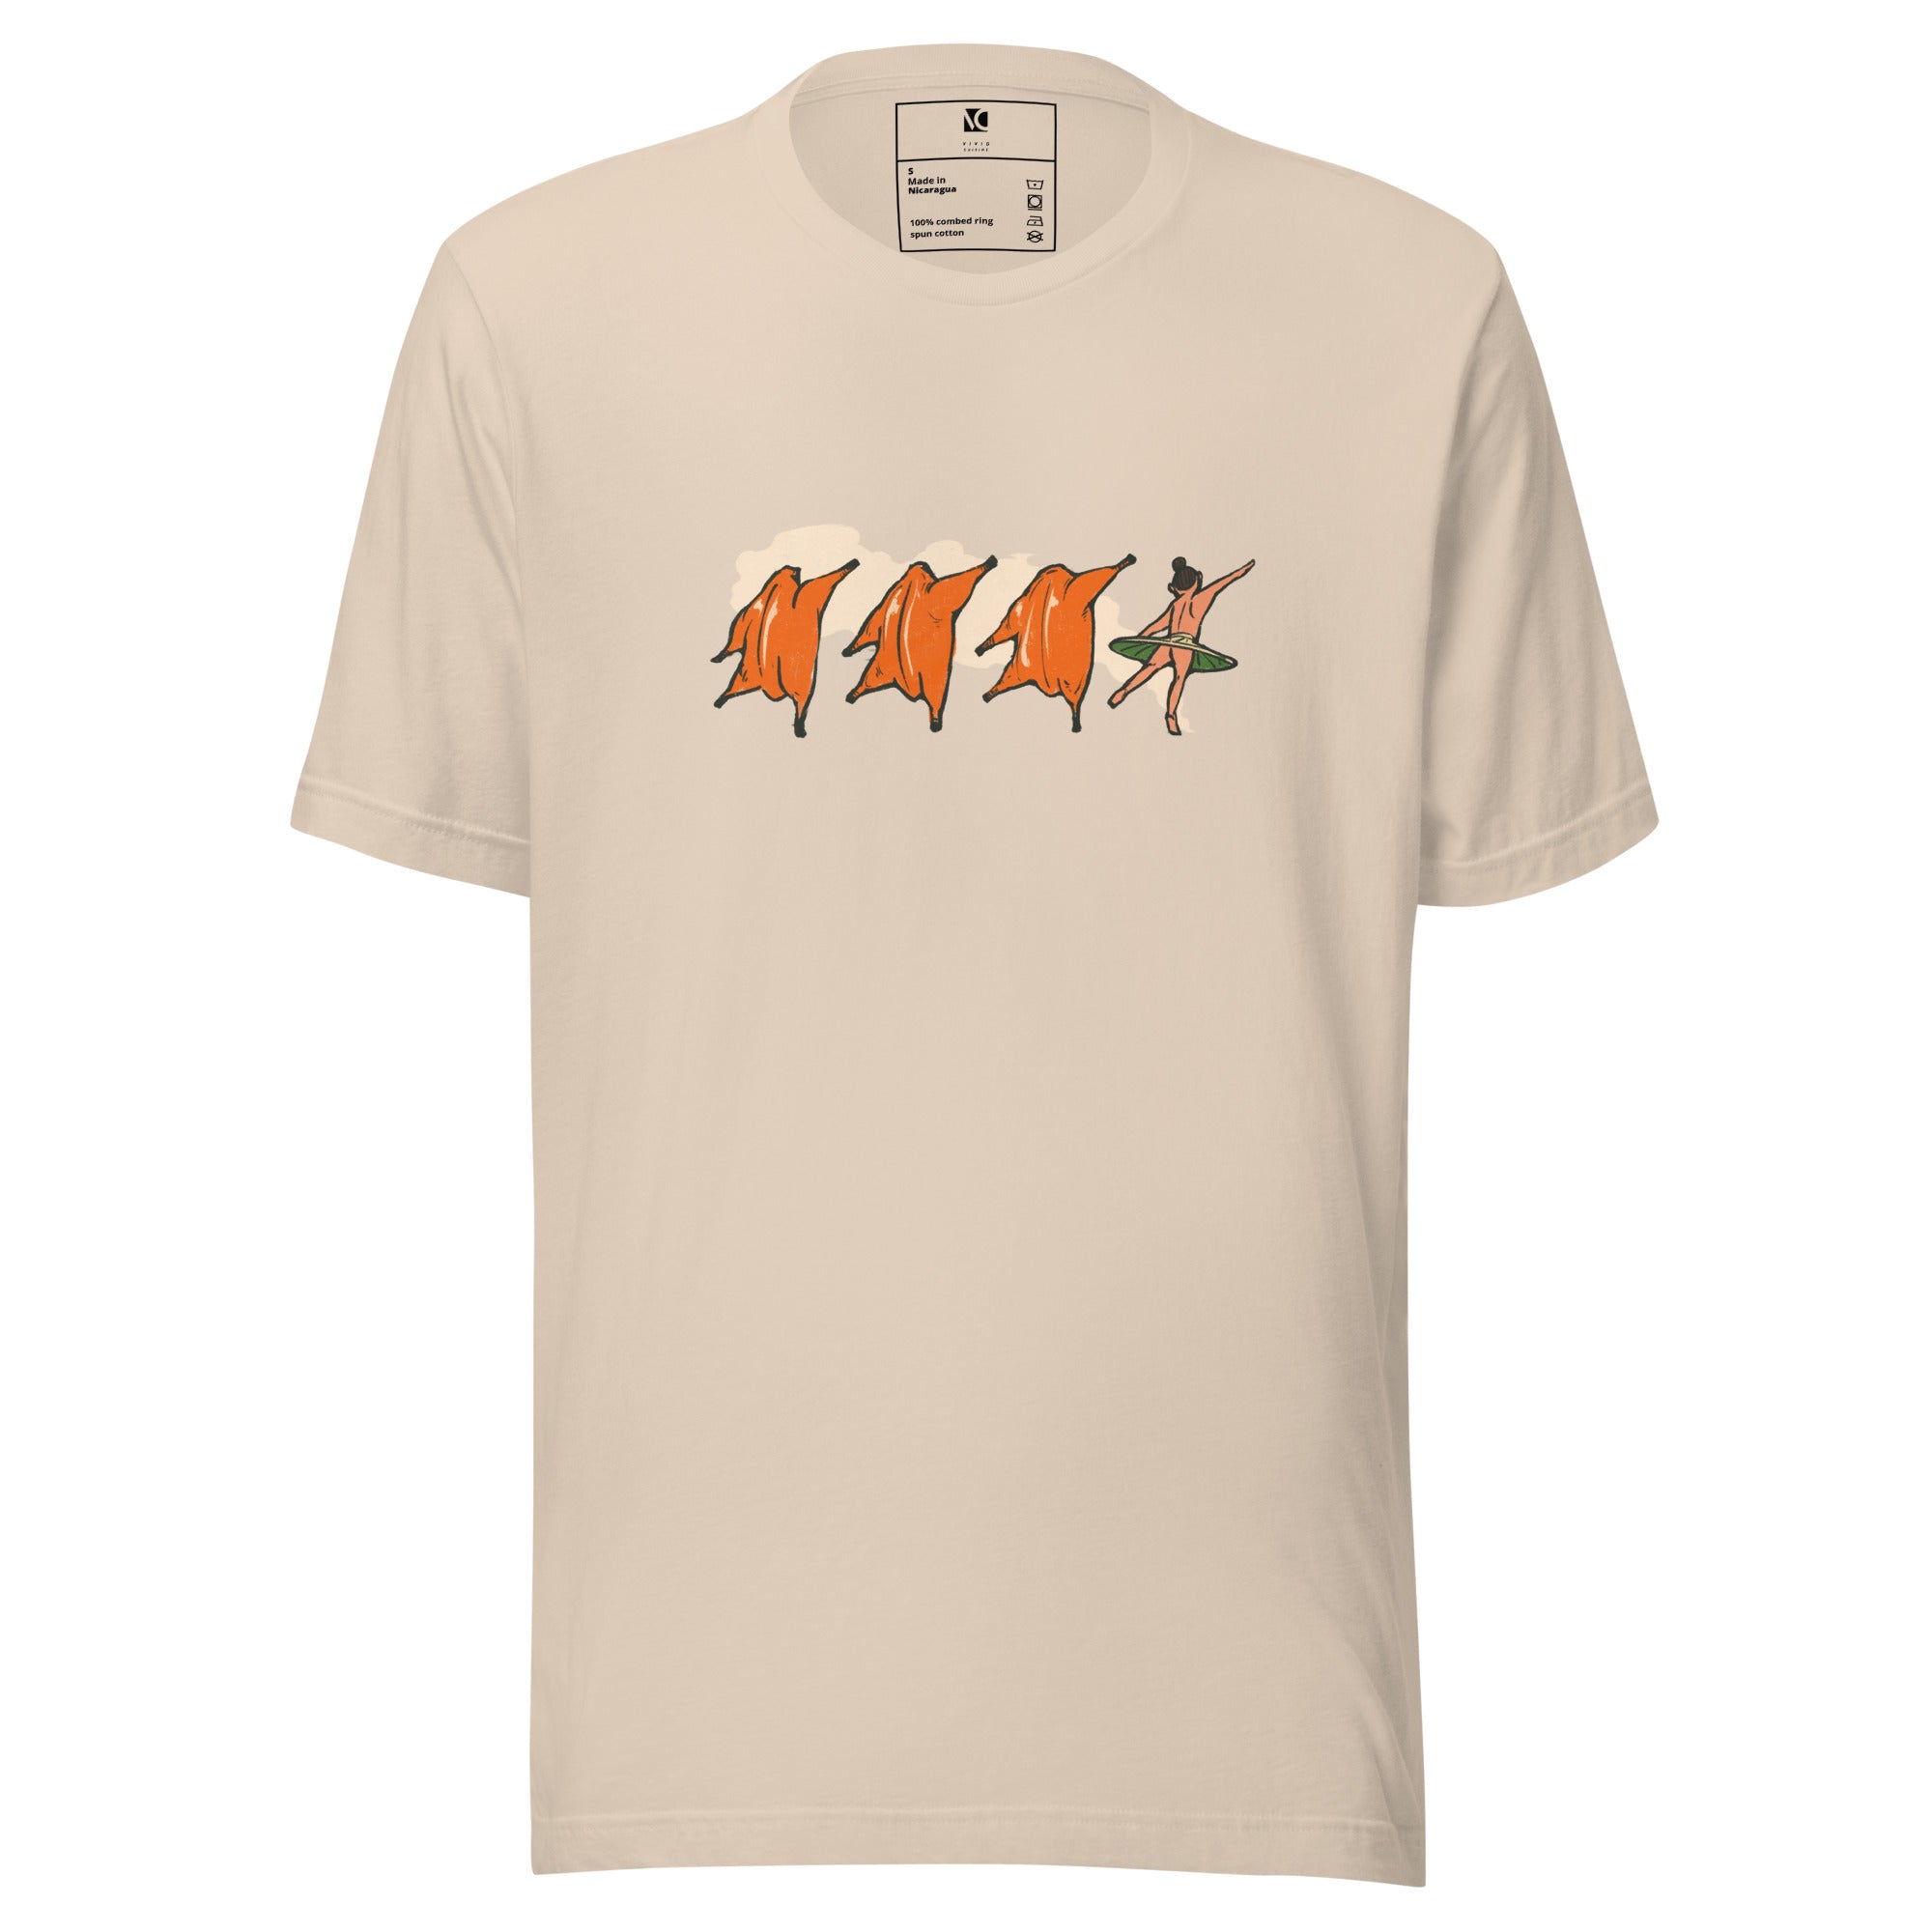 Dance of the Roasted Ducks - Unisex T-Shirt